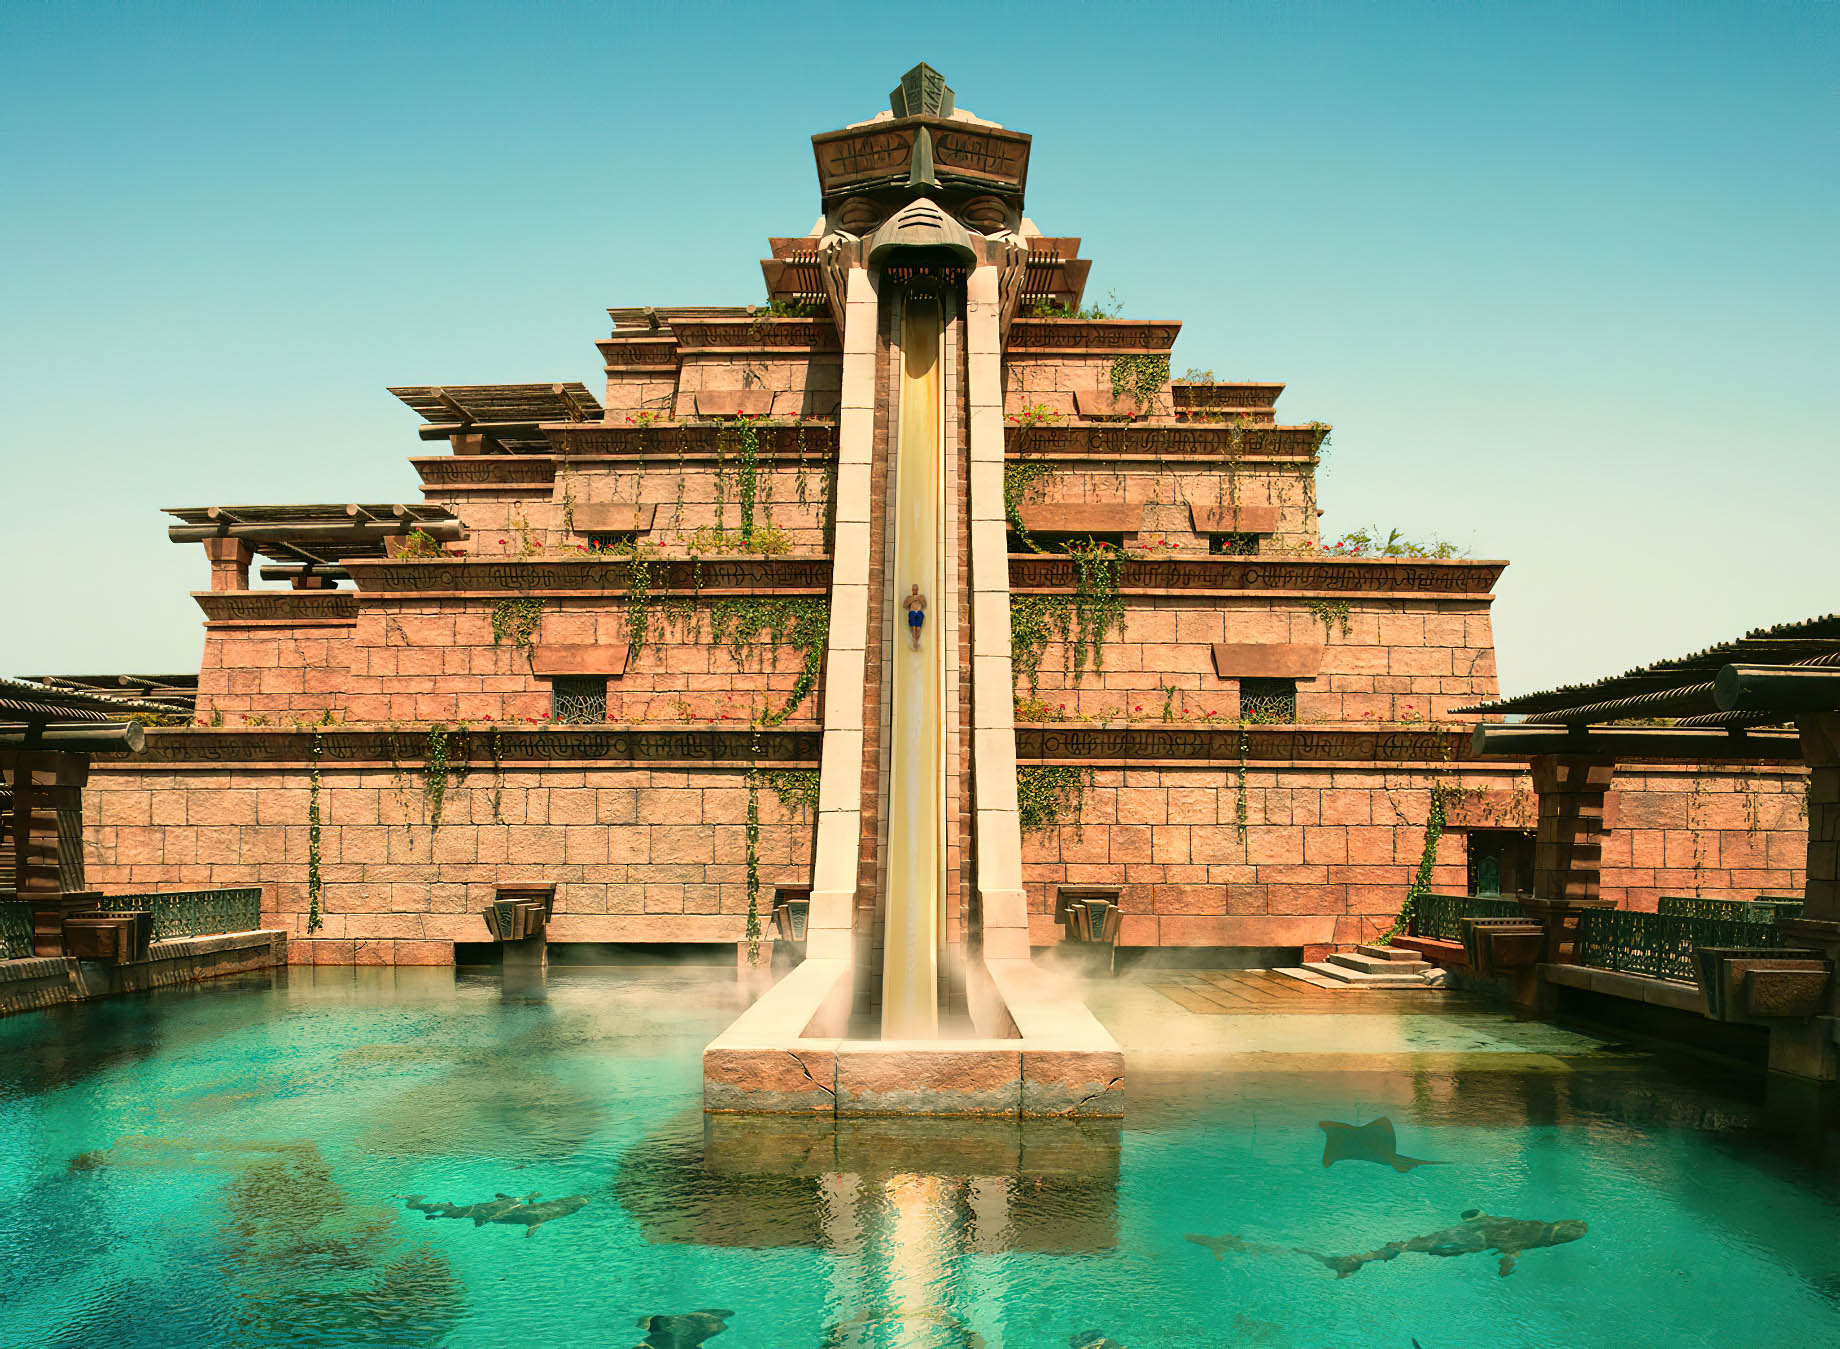 Atlantis The Palm Resort – Crescent Rd, Dubai, UAE – Tower of Neptune